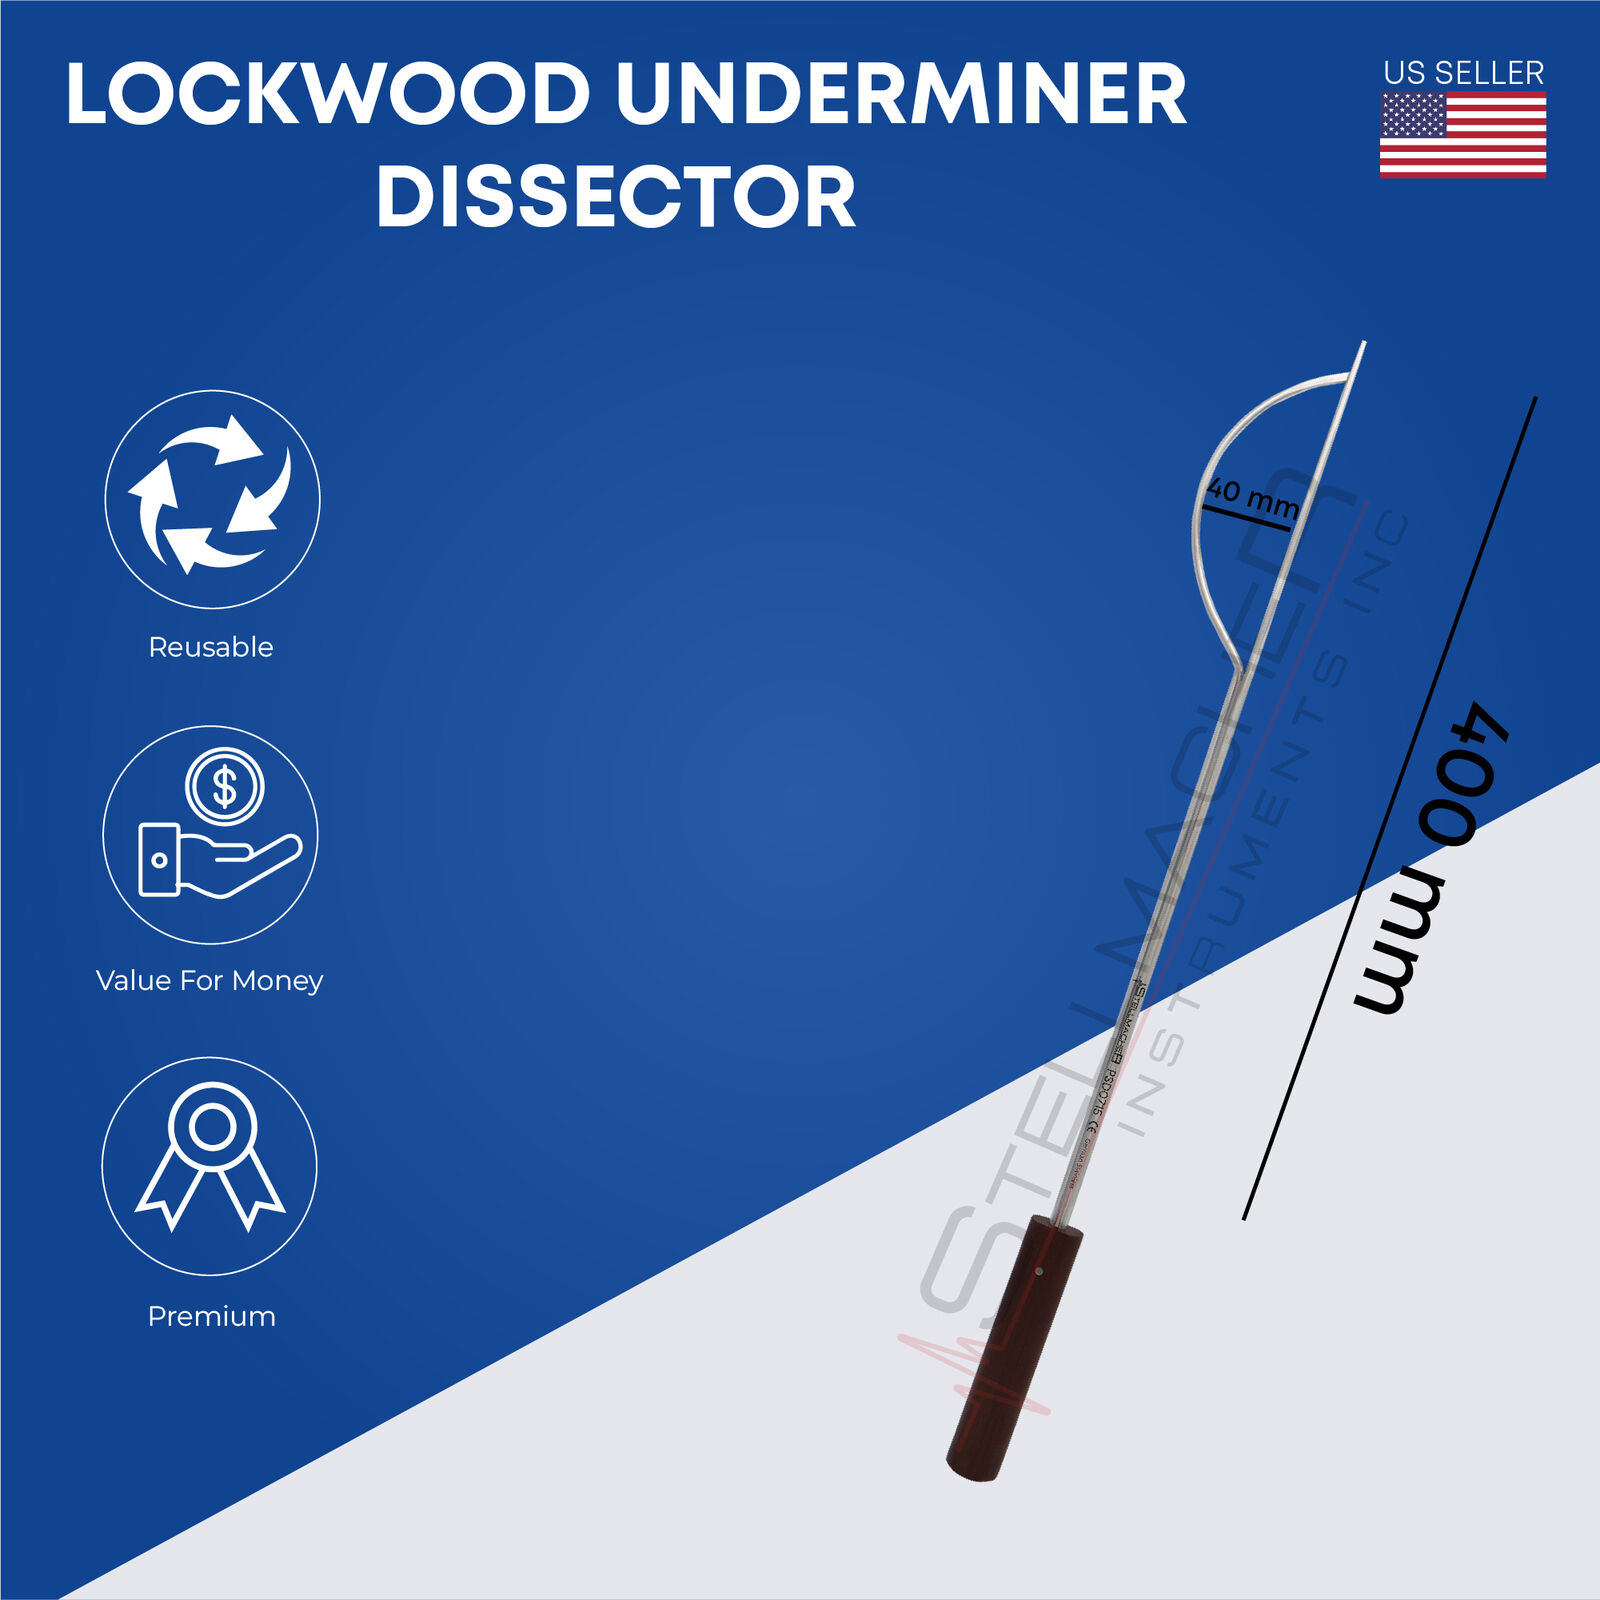 Lockwood Underminer Surgical dissectors